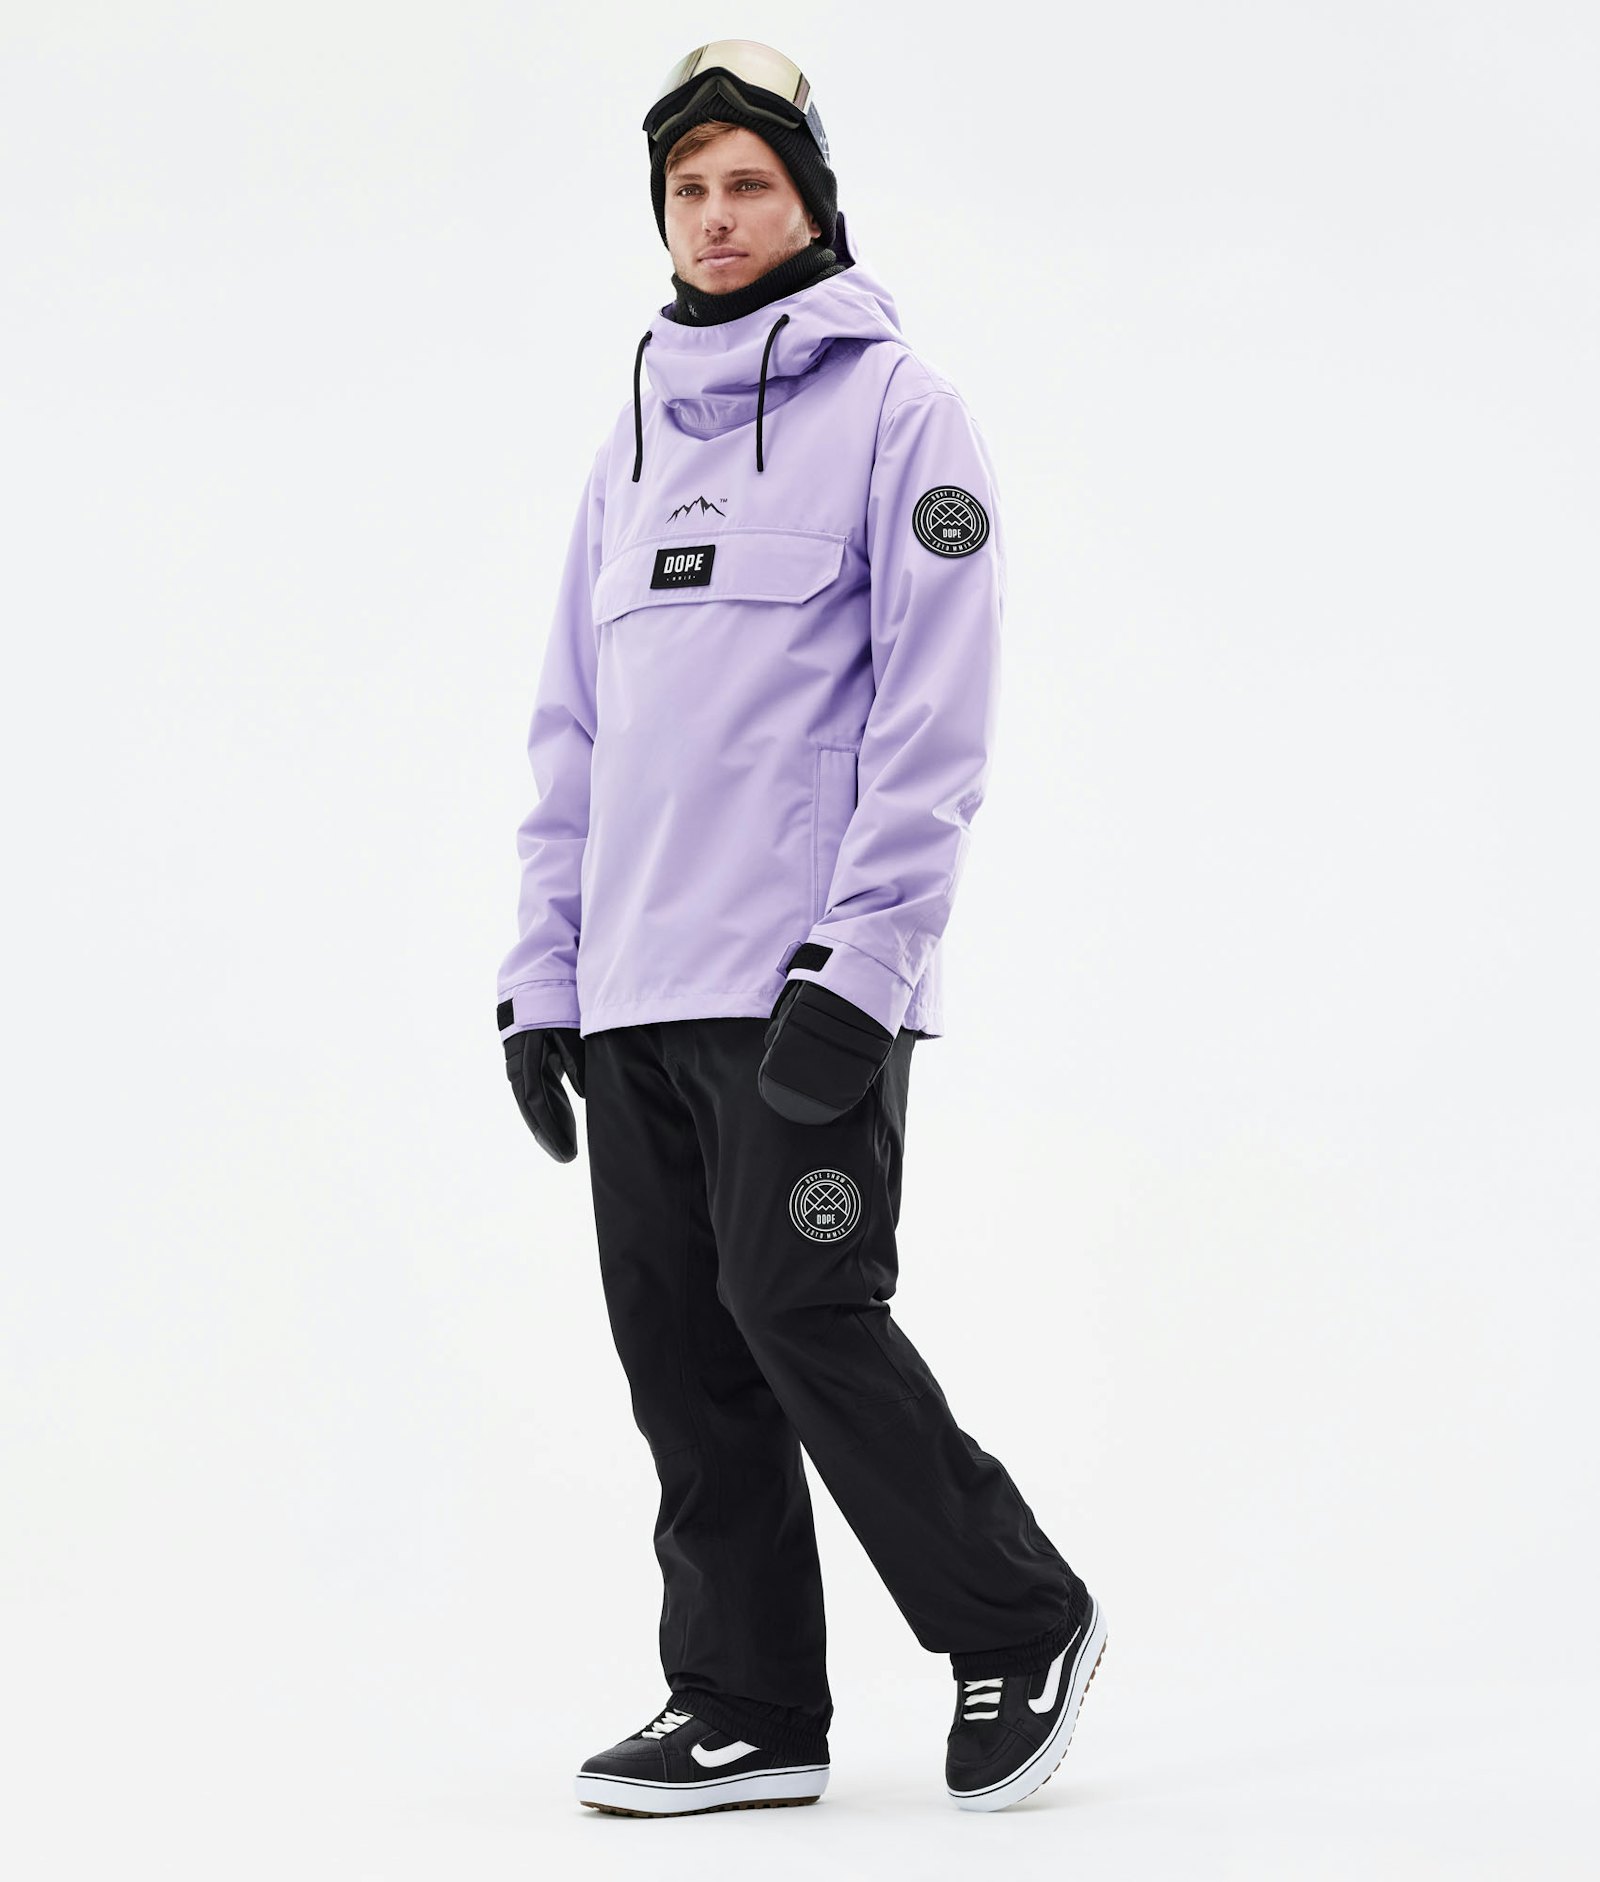 Blizzard 2021 Snowboard Jacket Men Faded Violet